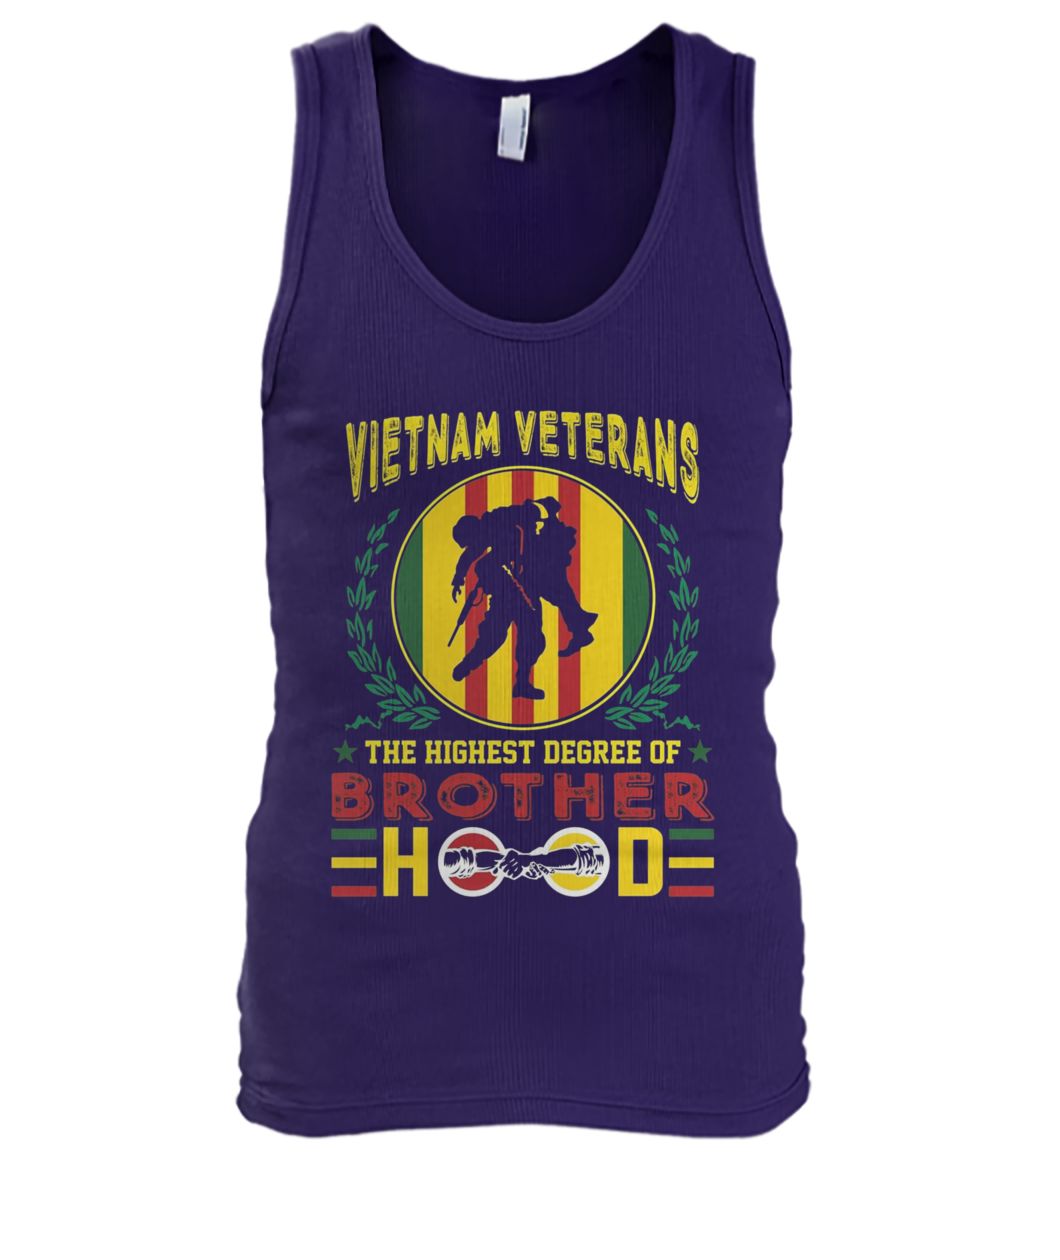 Vietnam veterans the highest degree of brotherhood men's tank top